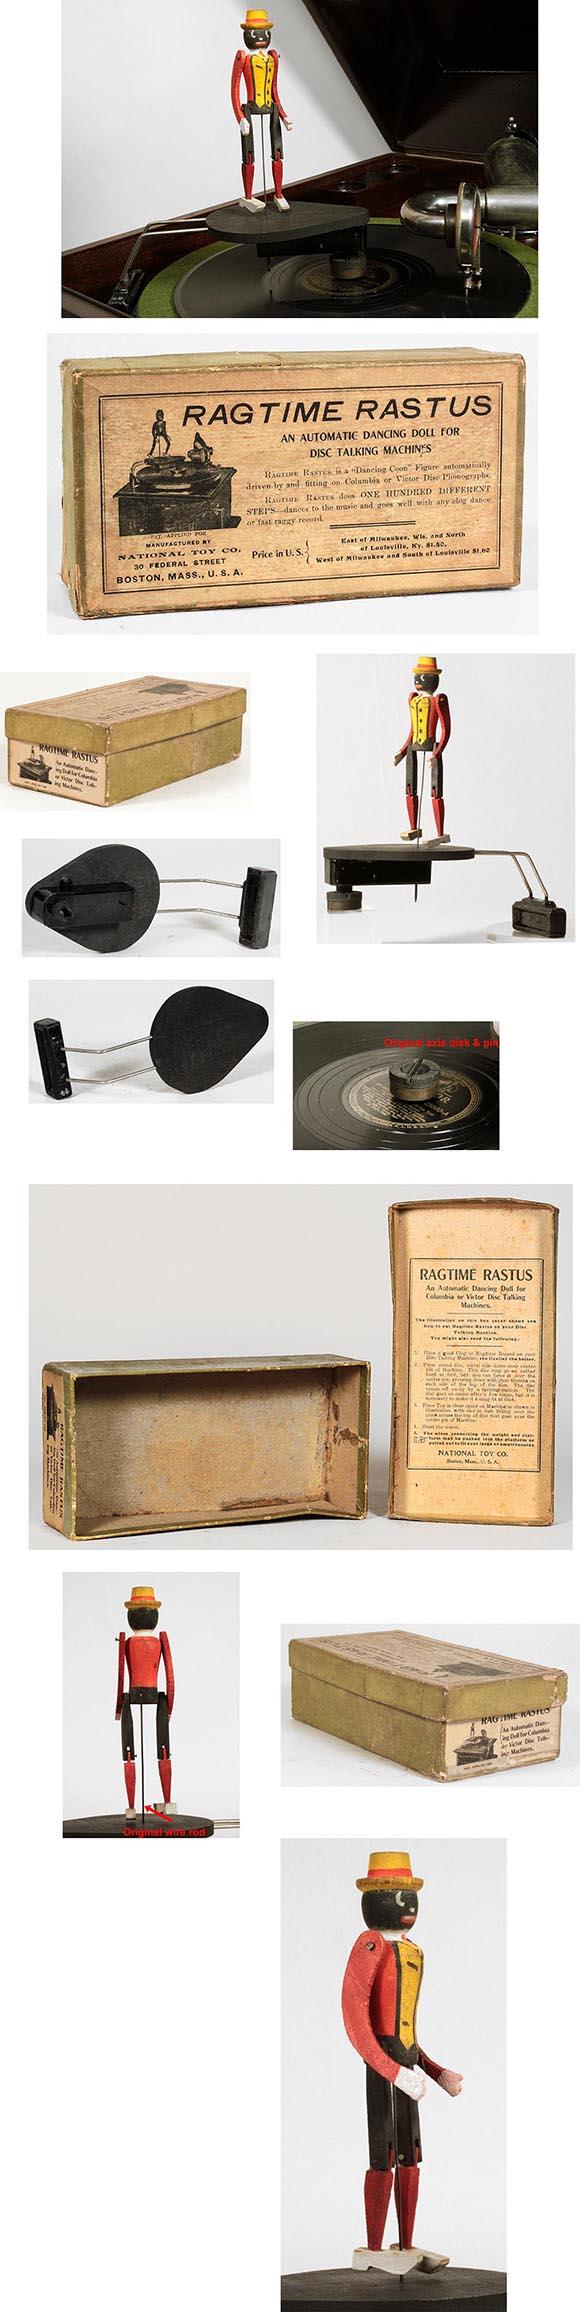 c.1915 National Toy Co., Ragtime Rastus Phonograph Toy in Orig. Box